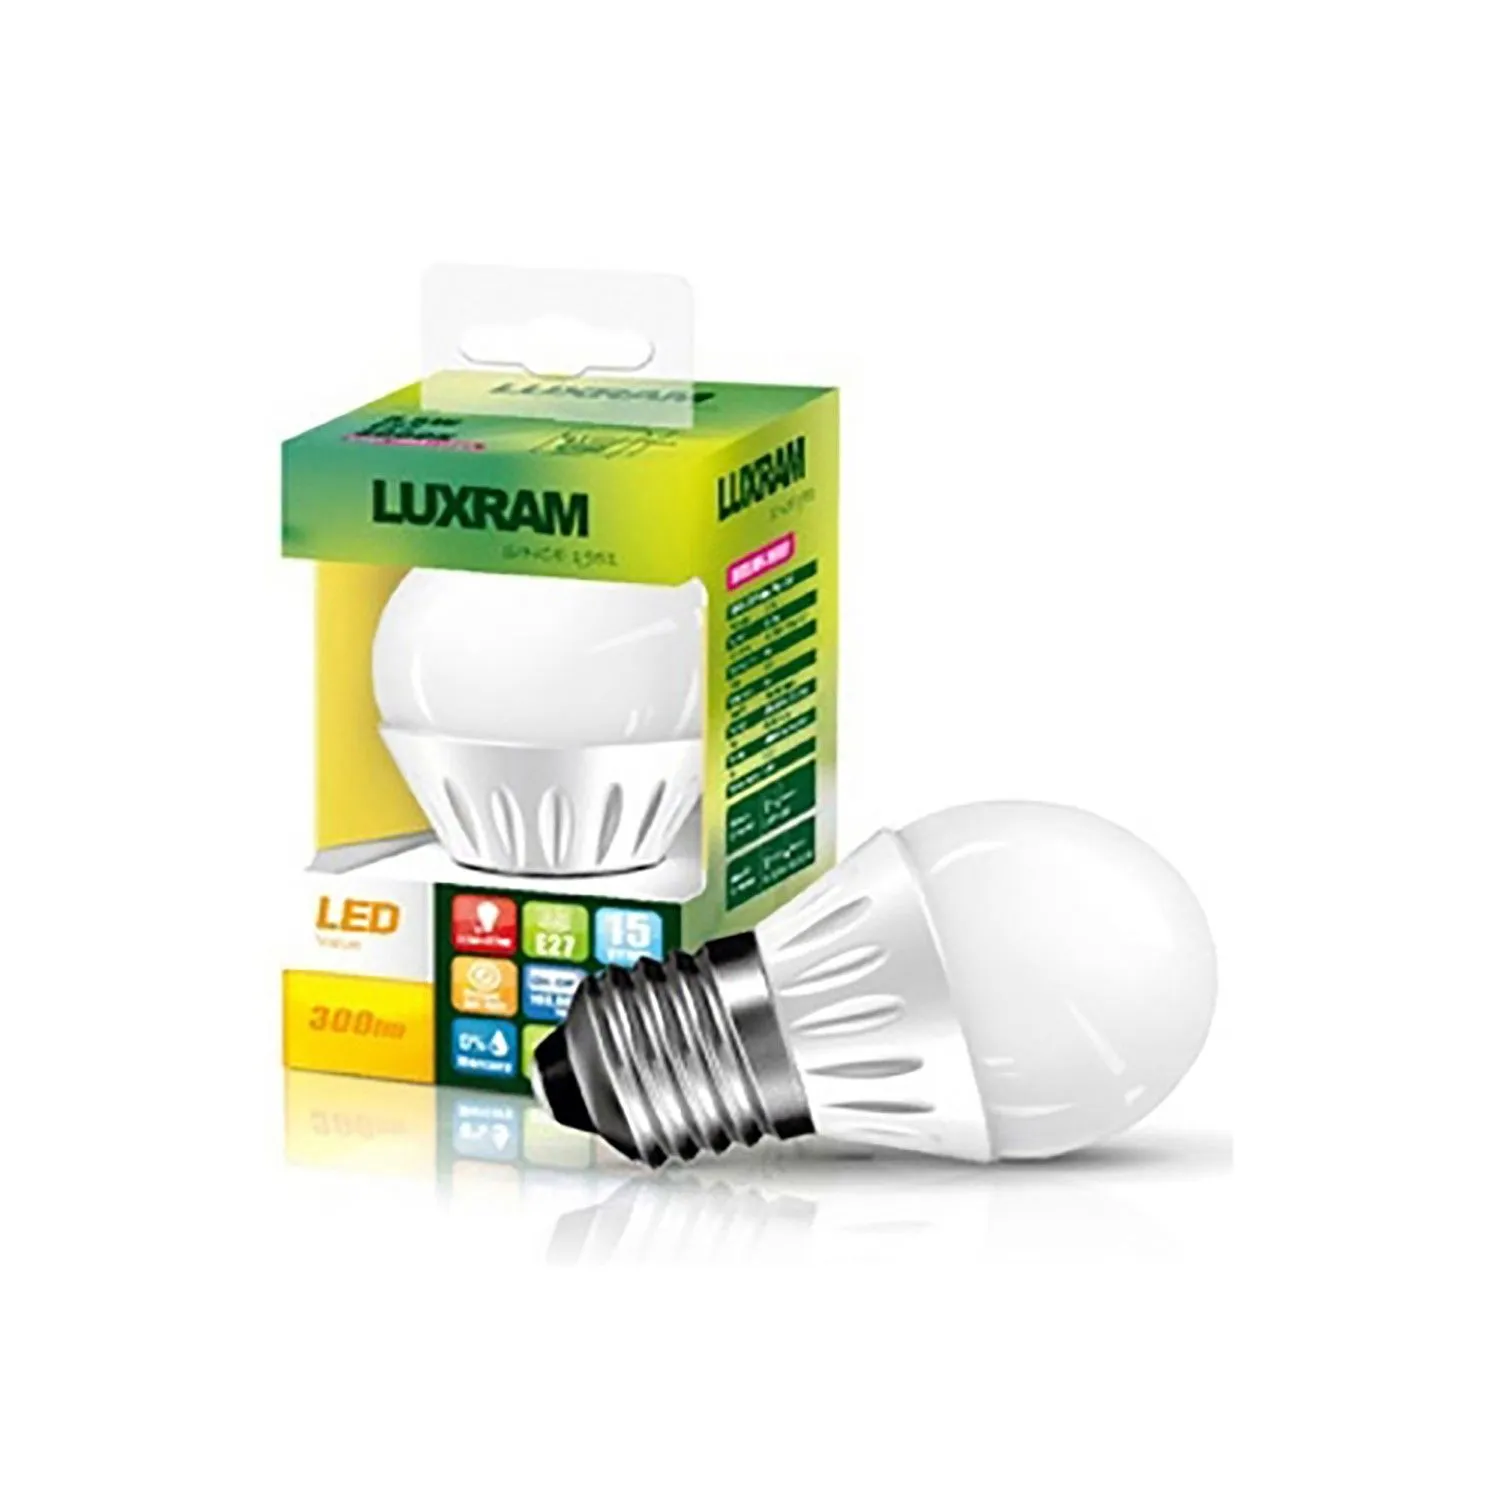 Value LED Ball Plus E27 3.5W White 6400K 300lm (1 1)